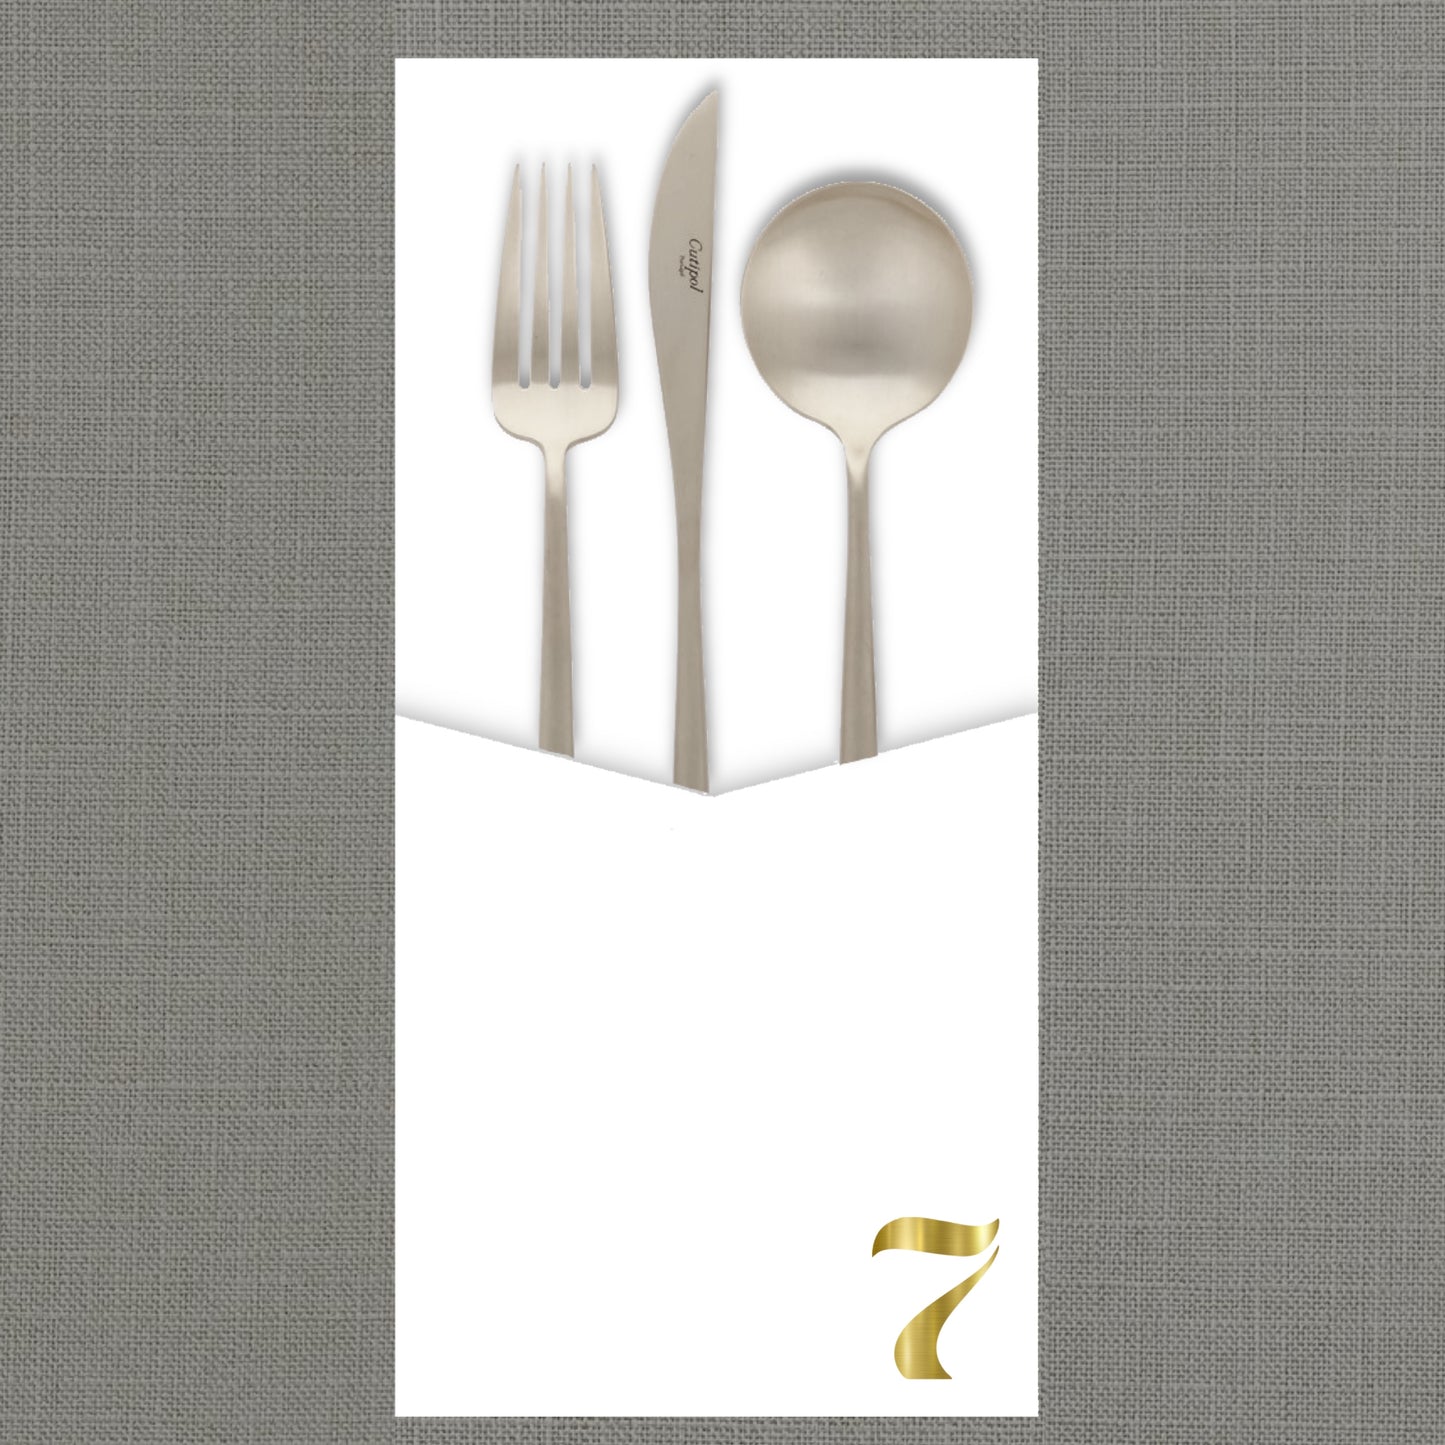 Foil Celebrate! 7 - Cutlery Pouch